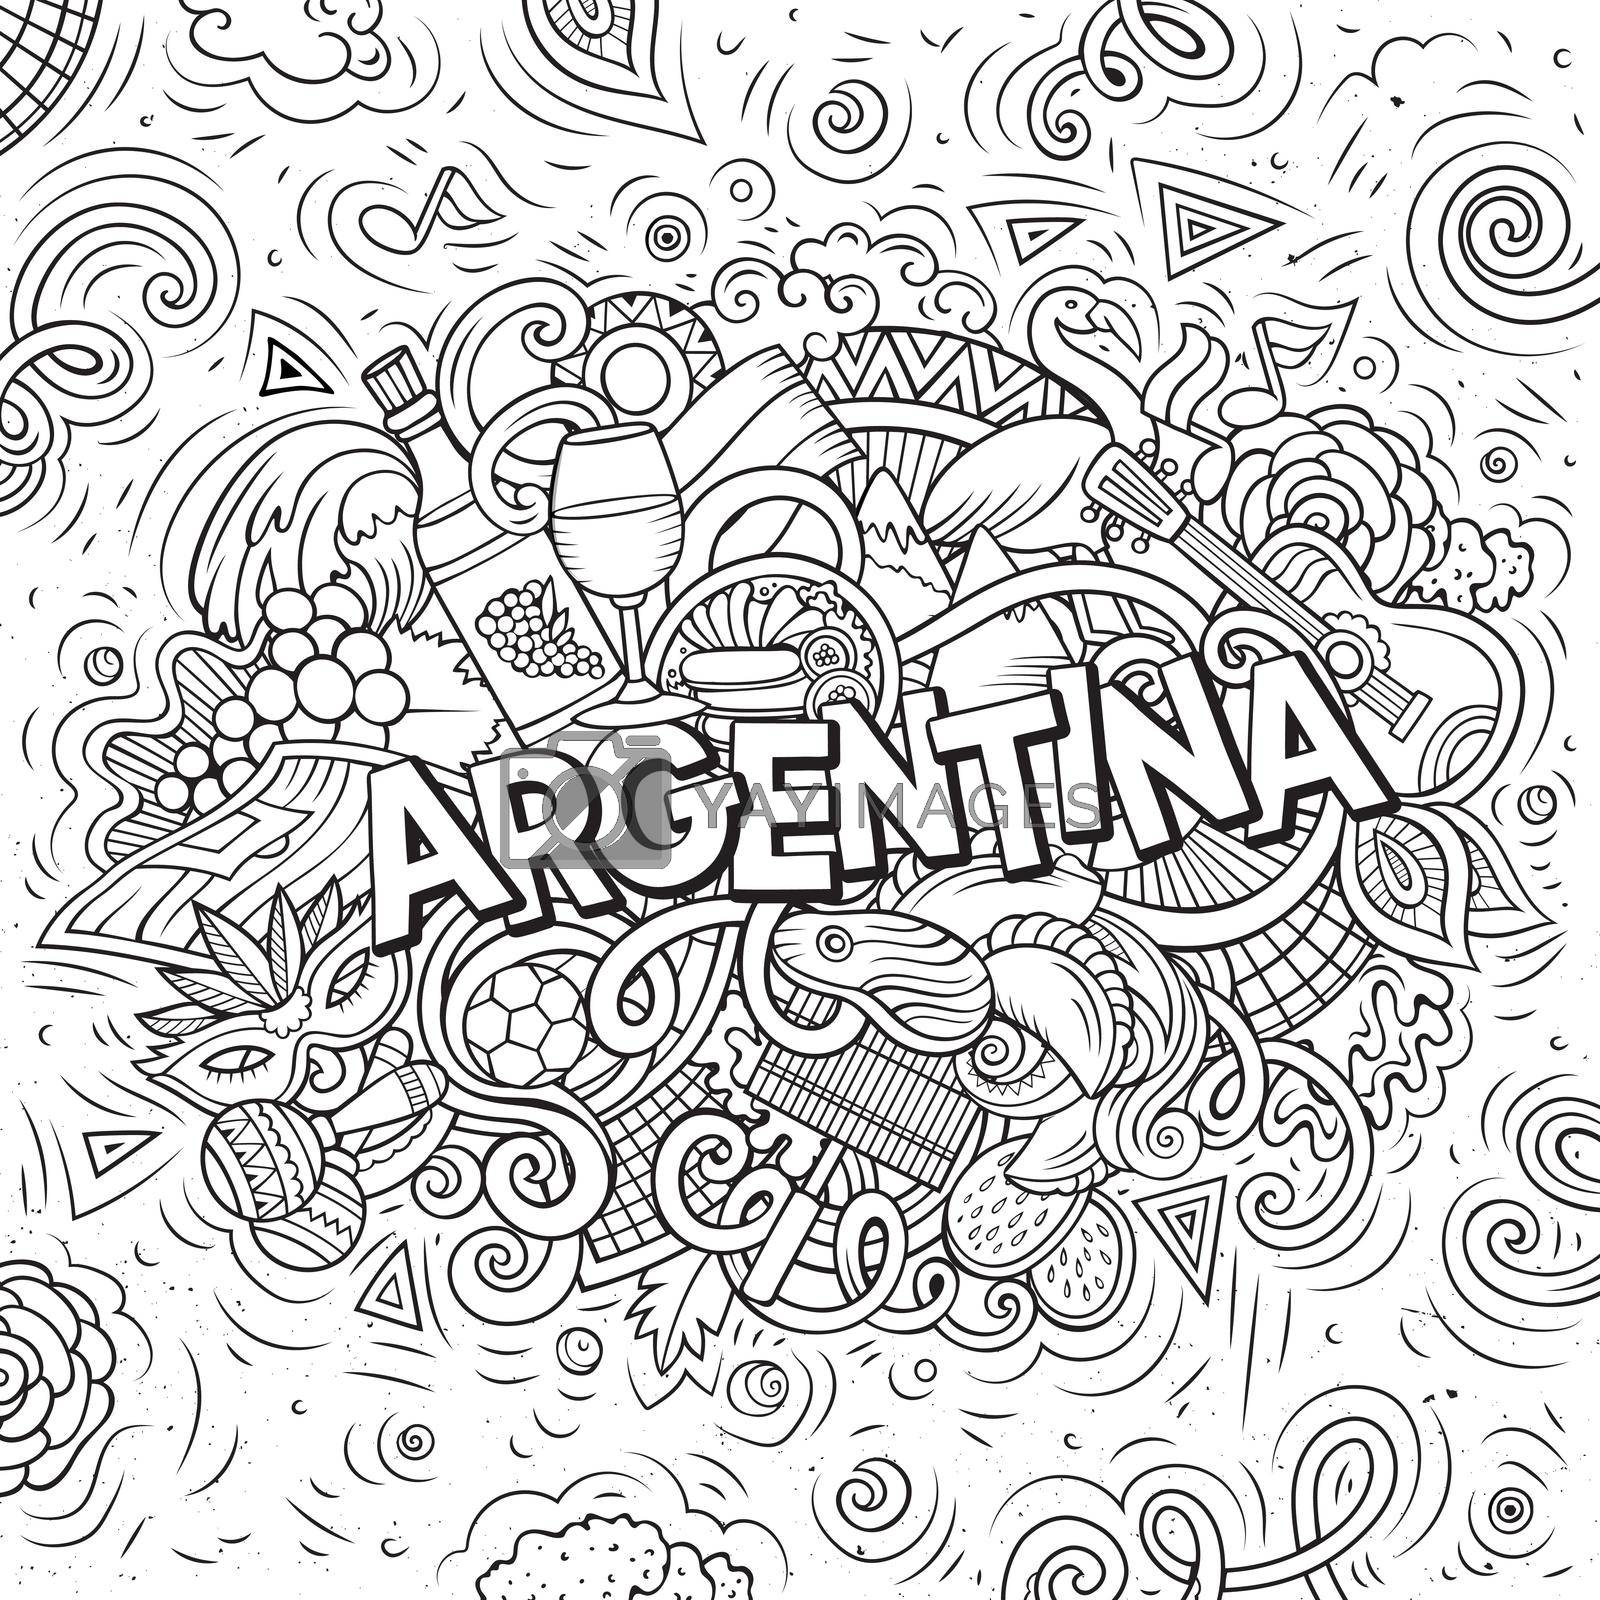 Royalty free image of Argentina hand drawn cartoon doodles illustration. Funny design. by balabolka